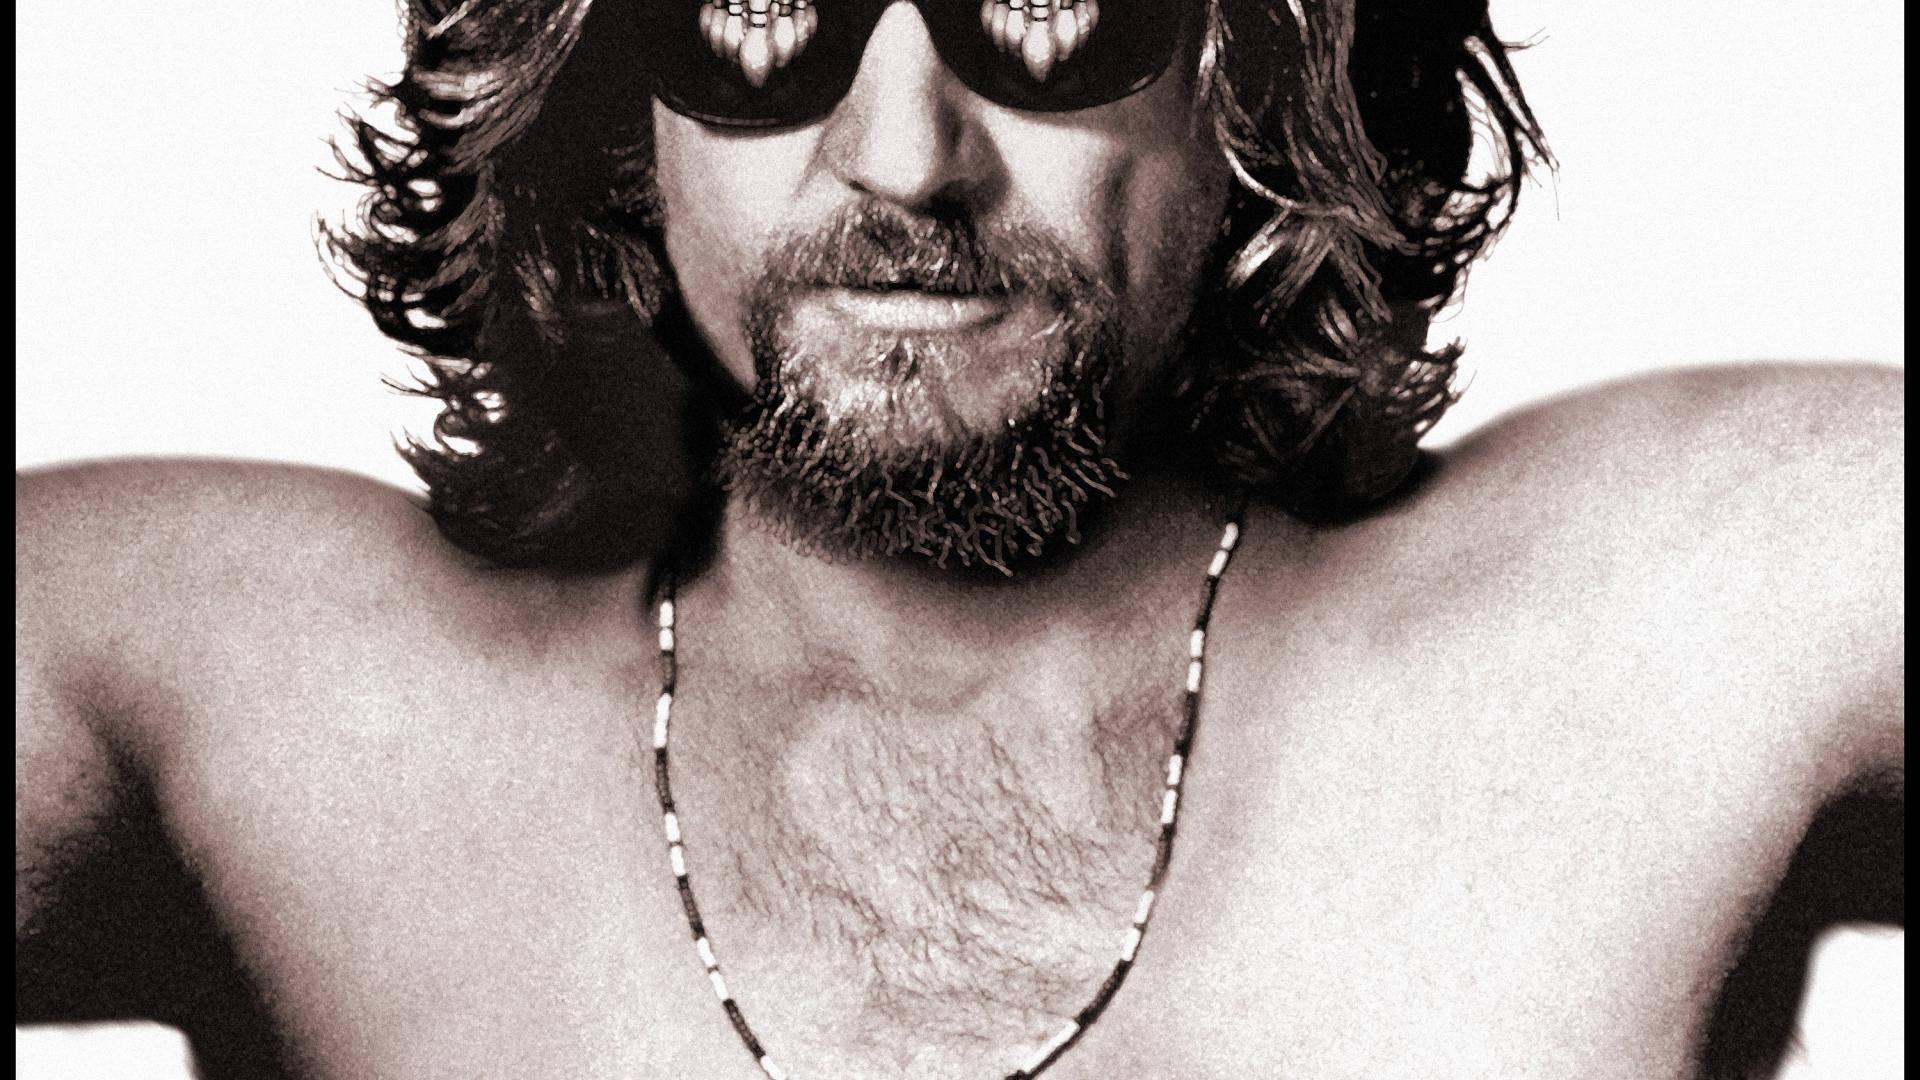 Caption: Jim Morrison, The Lizard King In His Prime